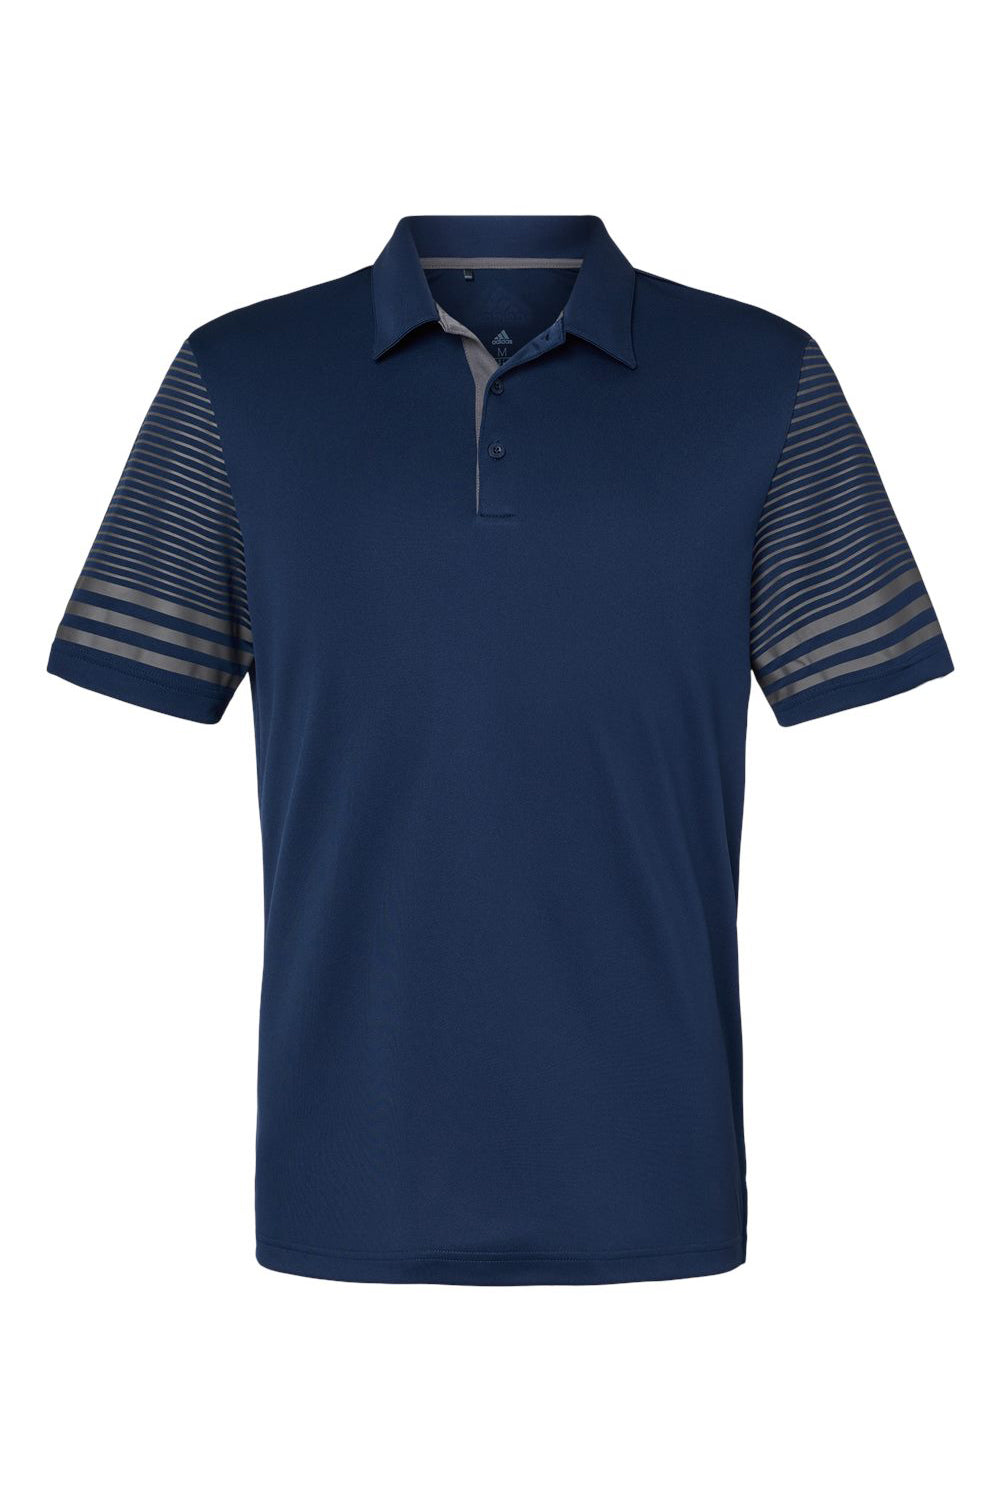 Adidas A490 Mens Striped Short Sleeve Polo Shirt Team Navy Blue/Grey Flat Front